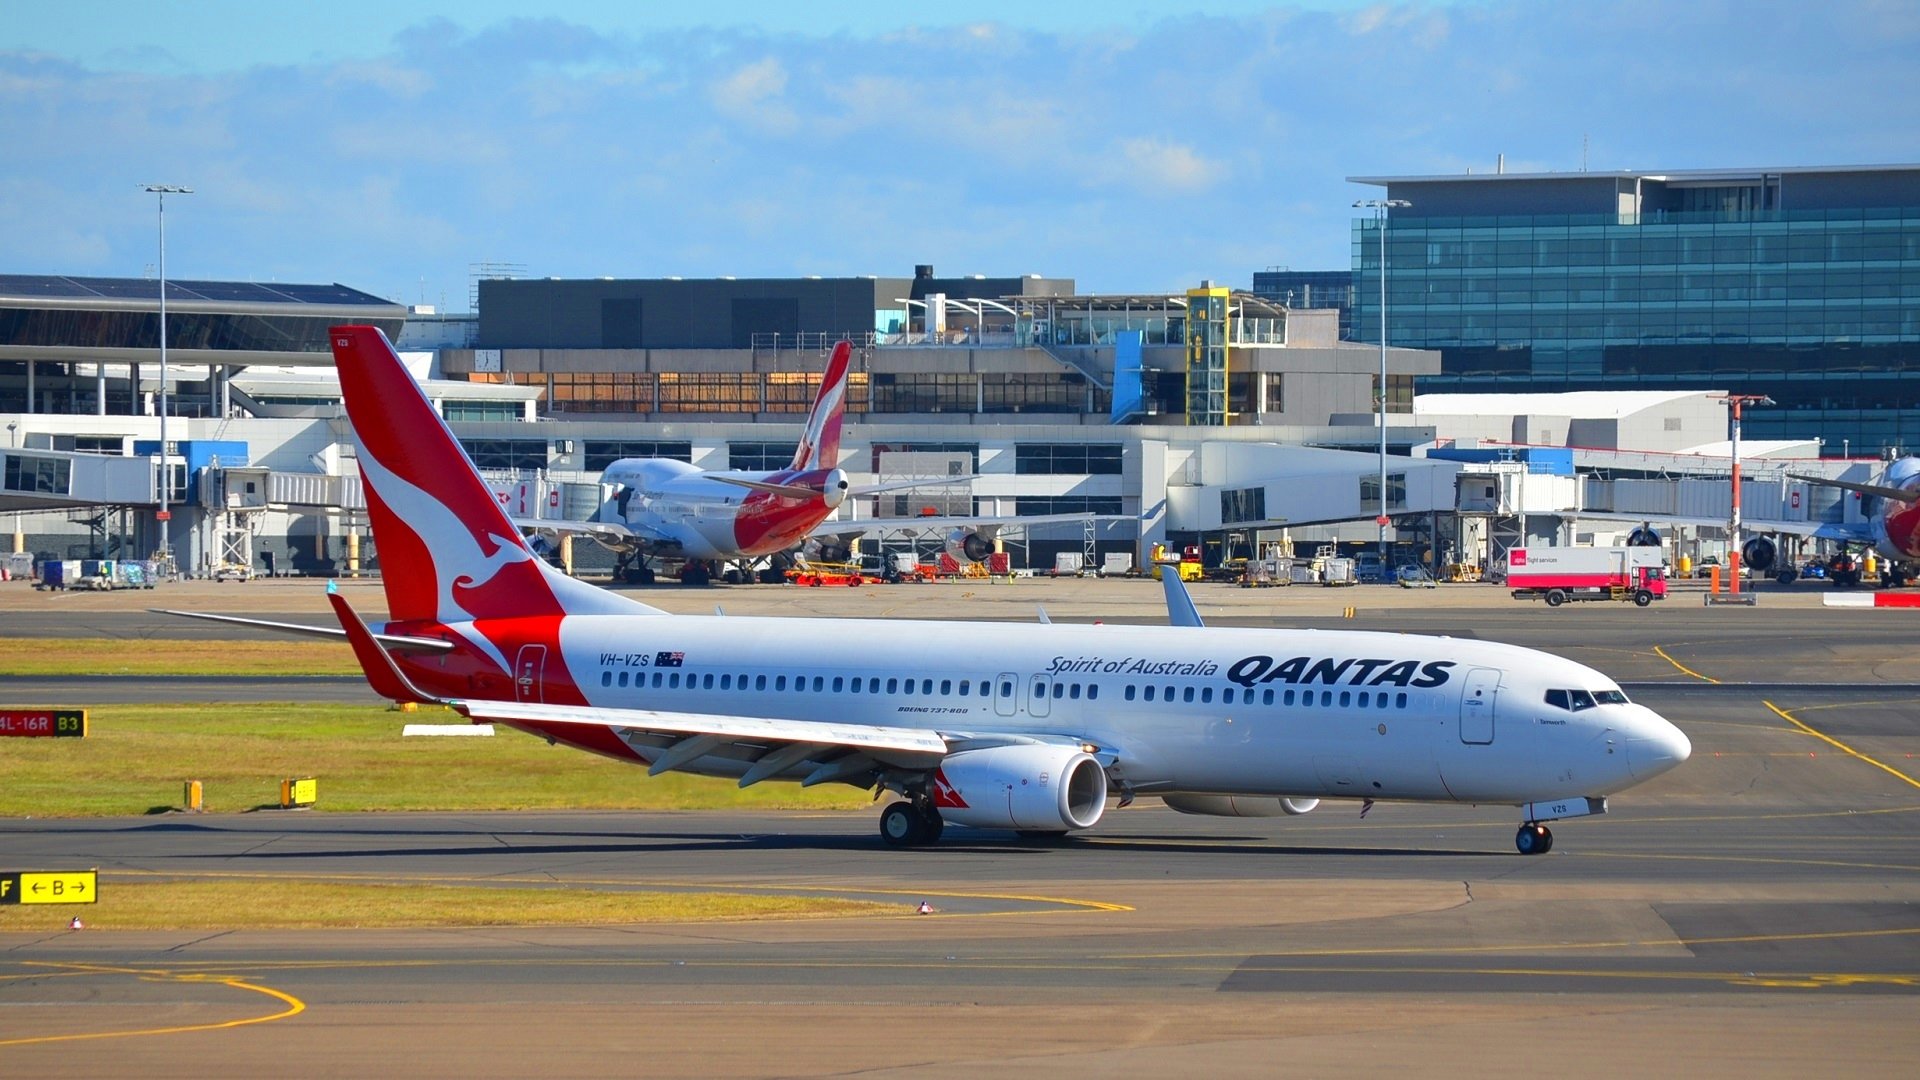 Qantas HD Wallpaper Background Image